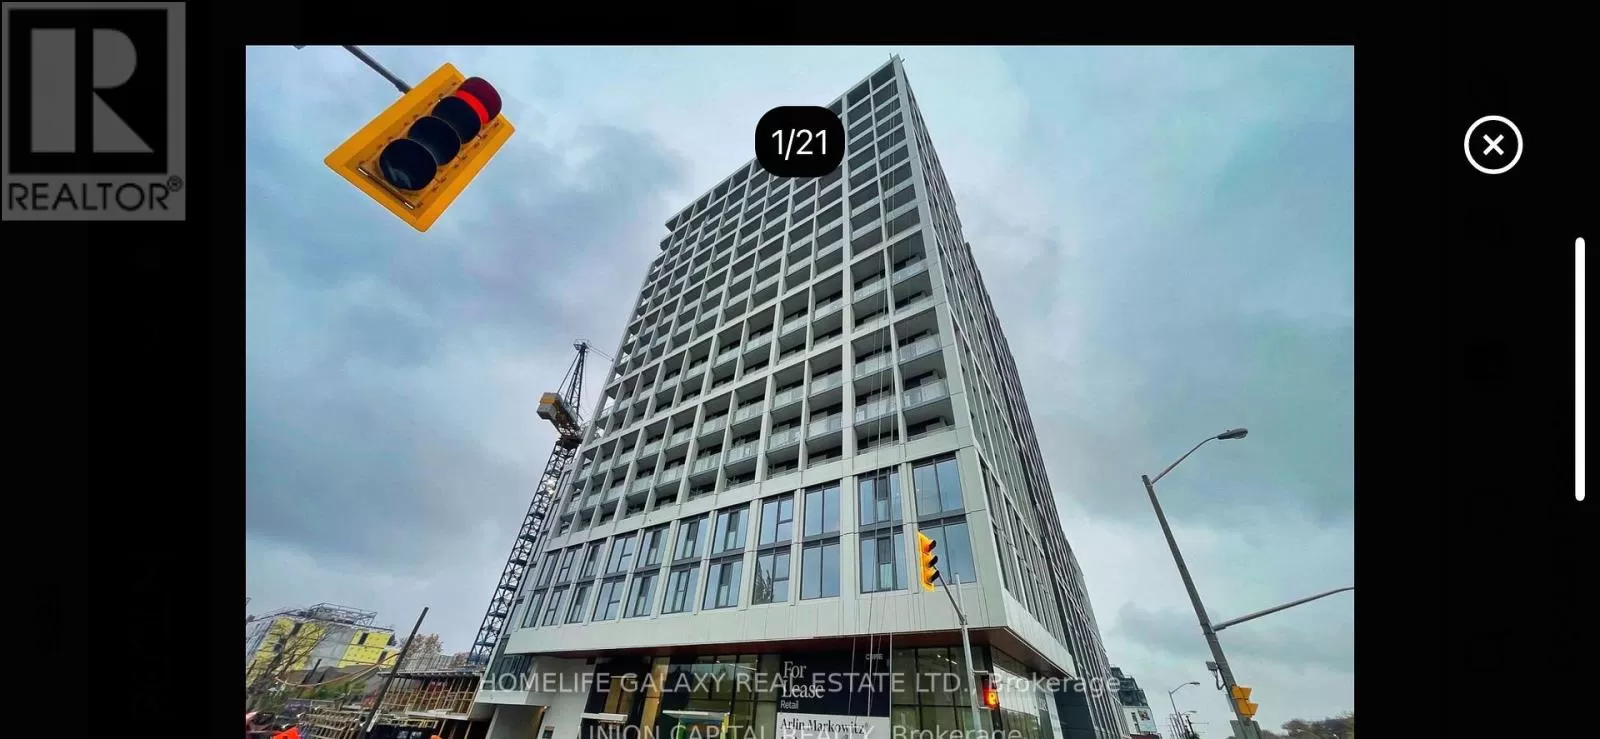 Apartment for rent: 307 - 2020 Bathurst Street, Toronto, Ontario M5P 0A6